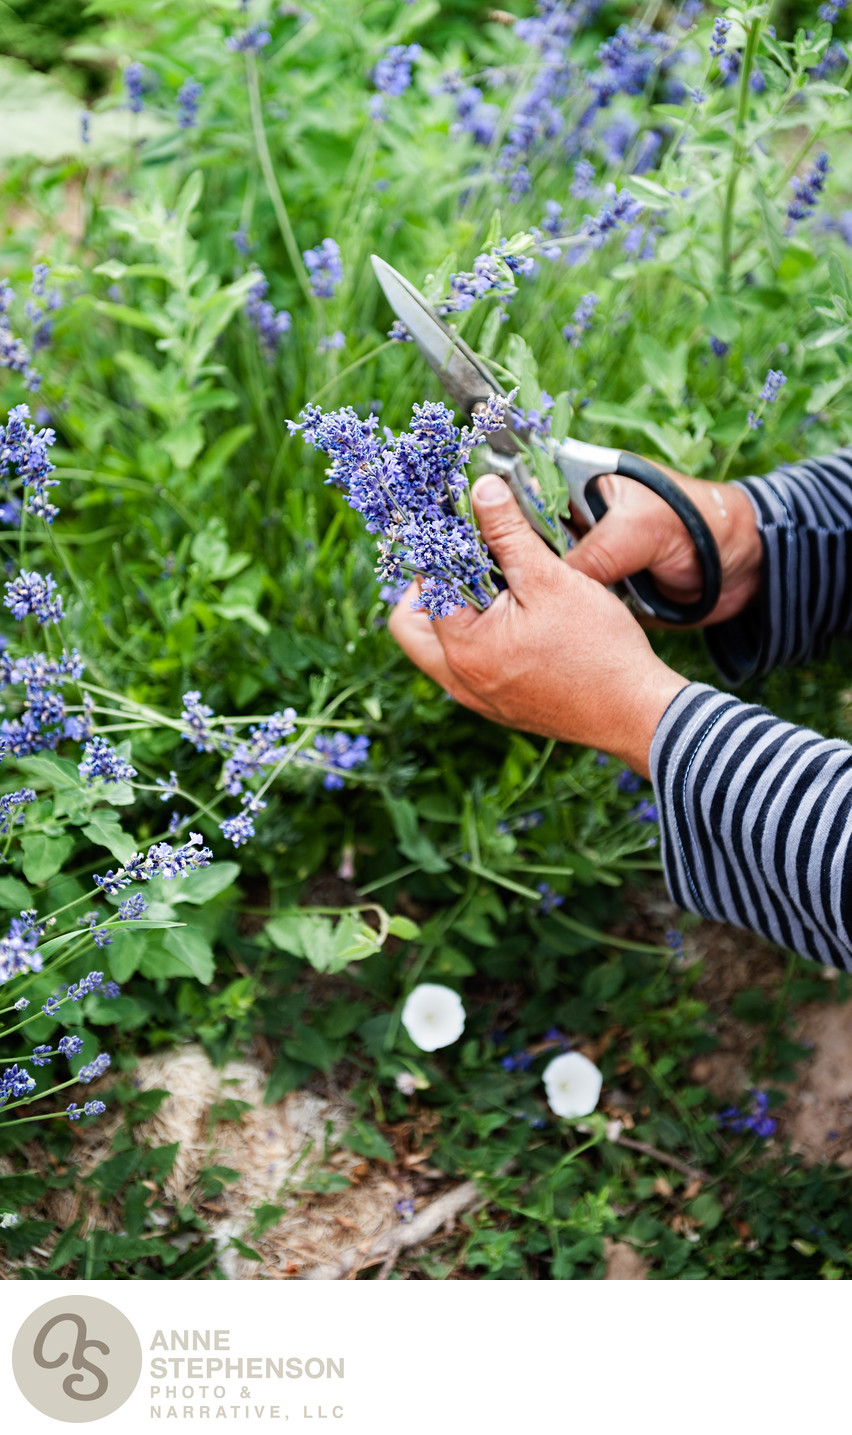 Harvesting lavender by hand.